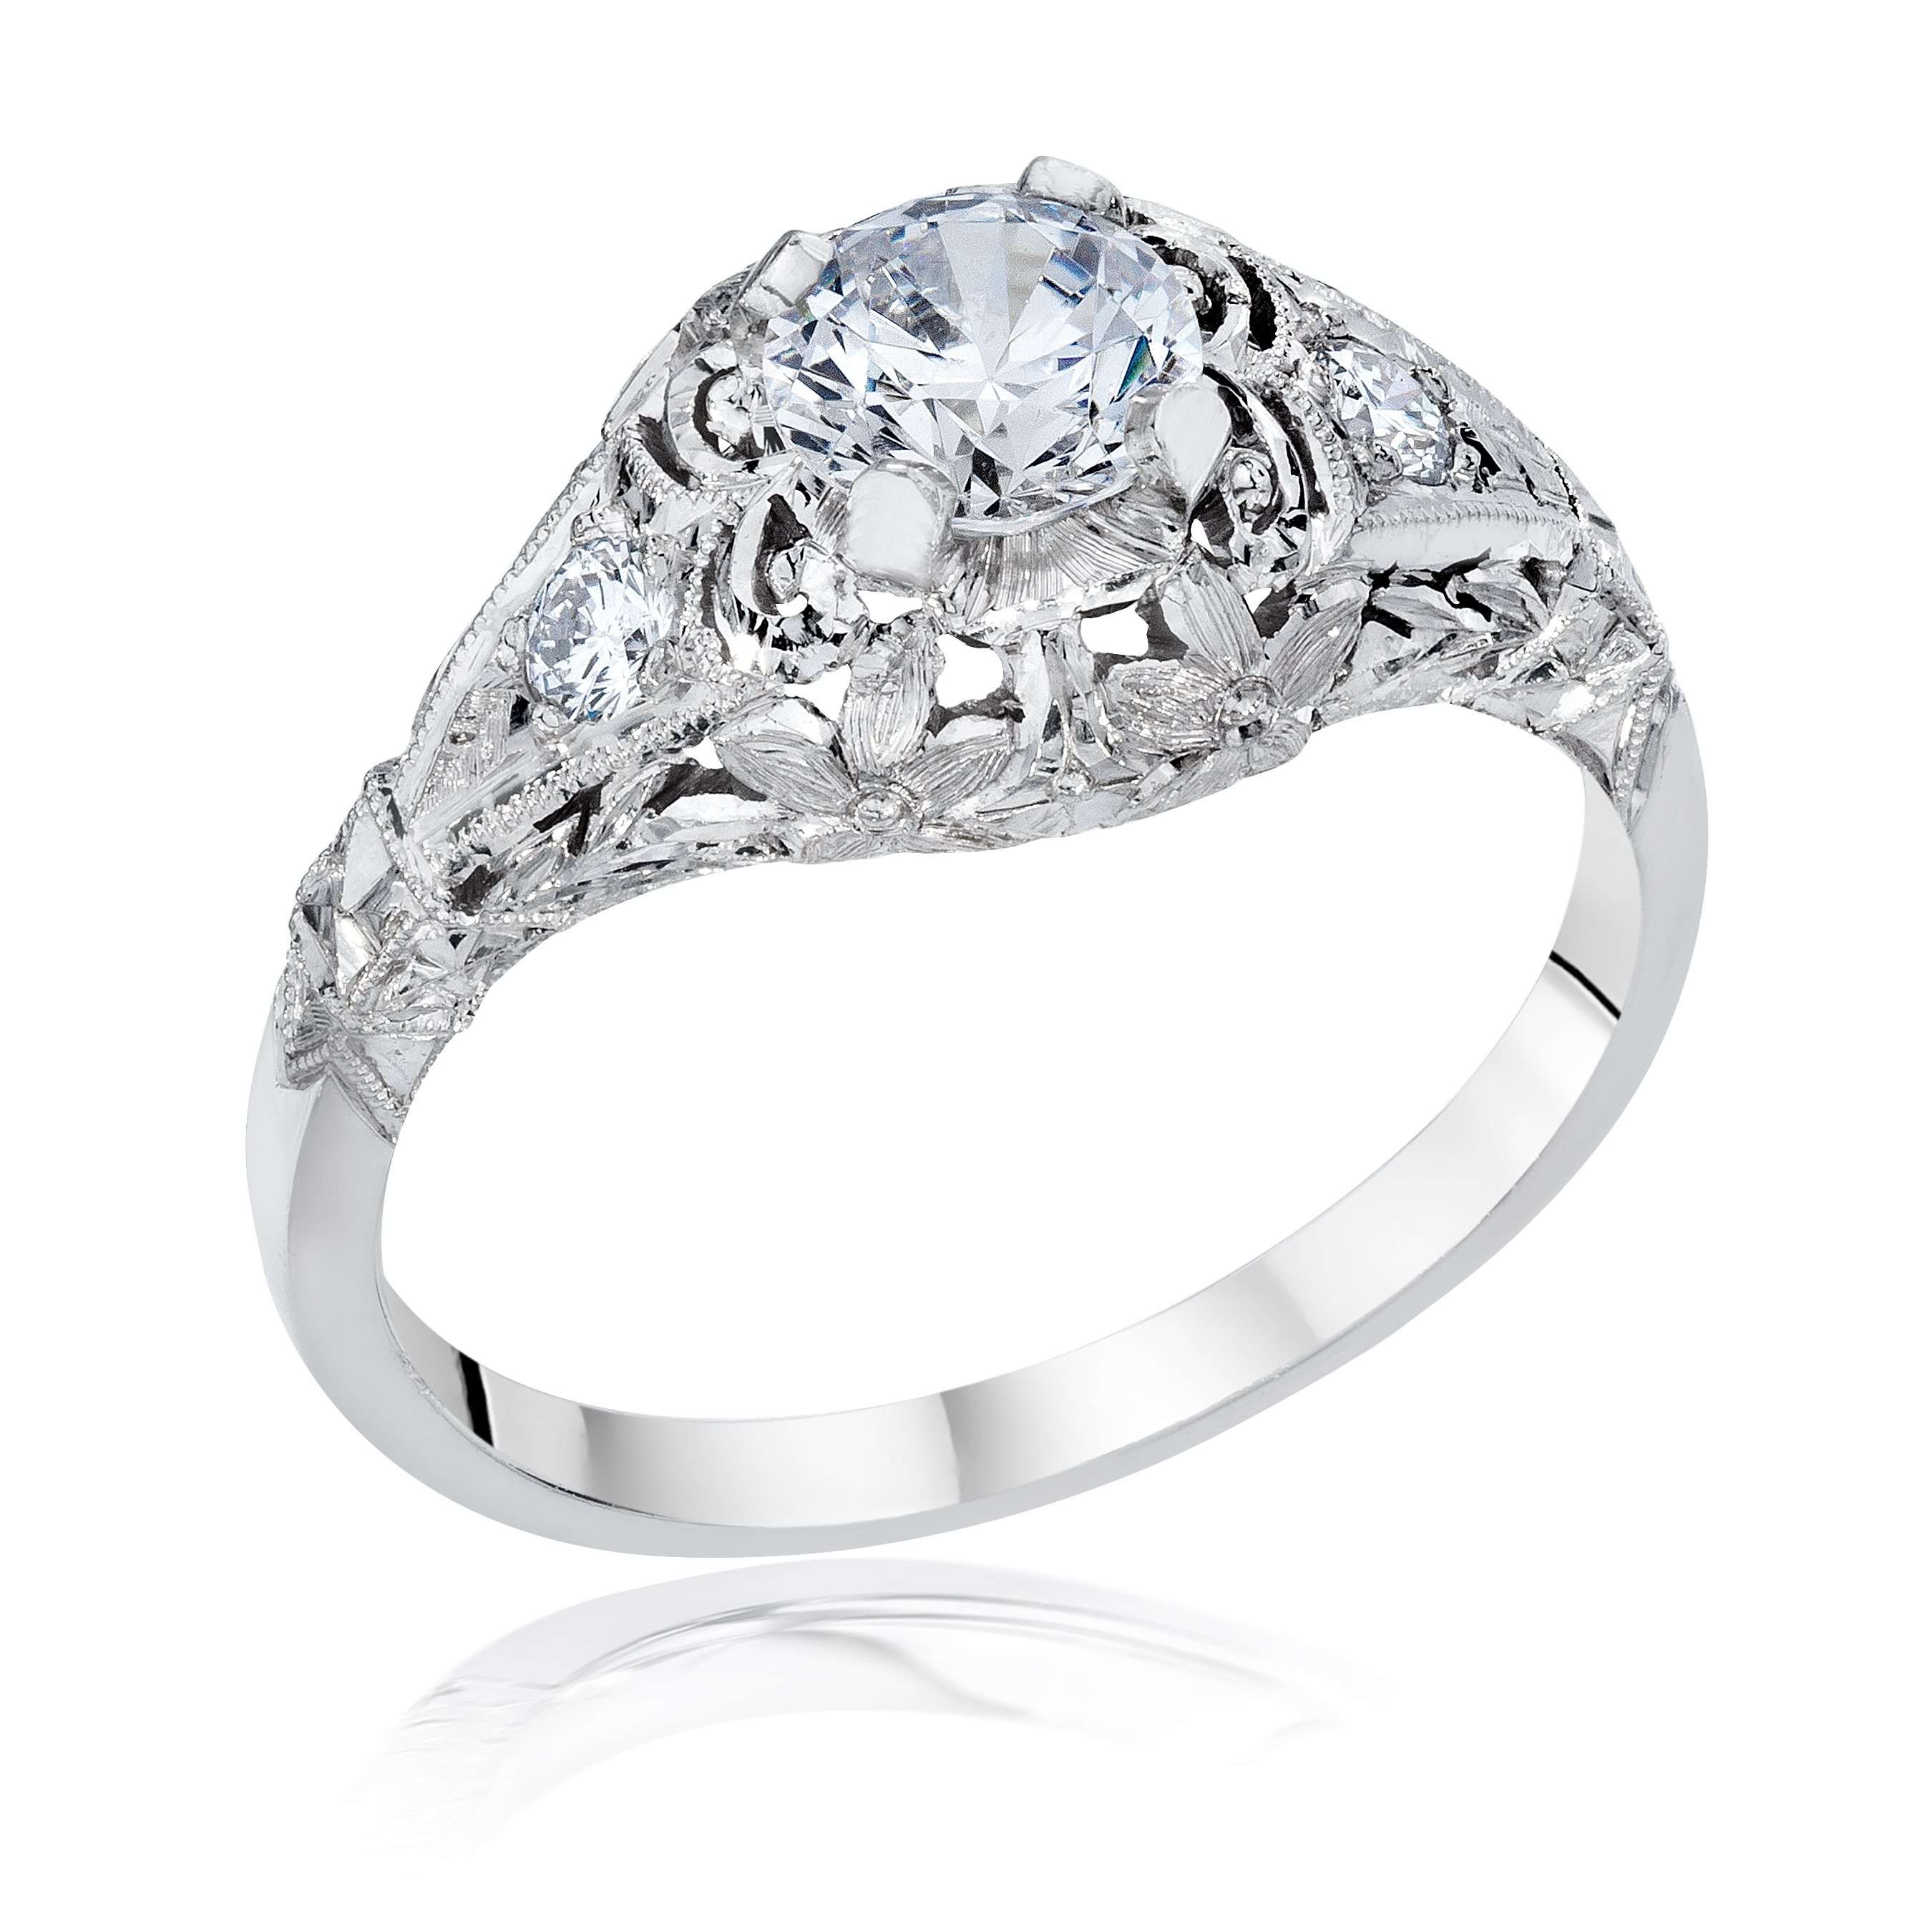 The Original Sapphire Engagement Ring